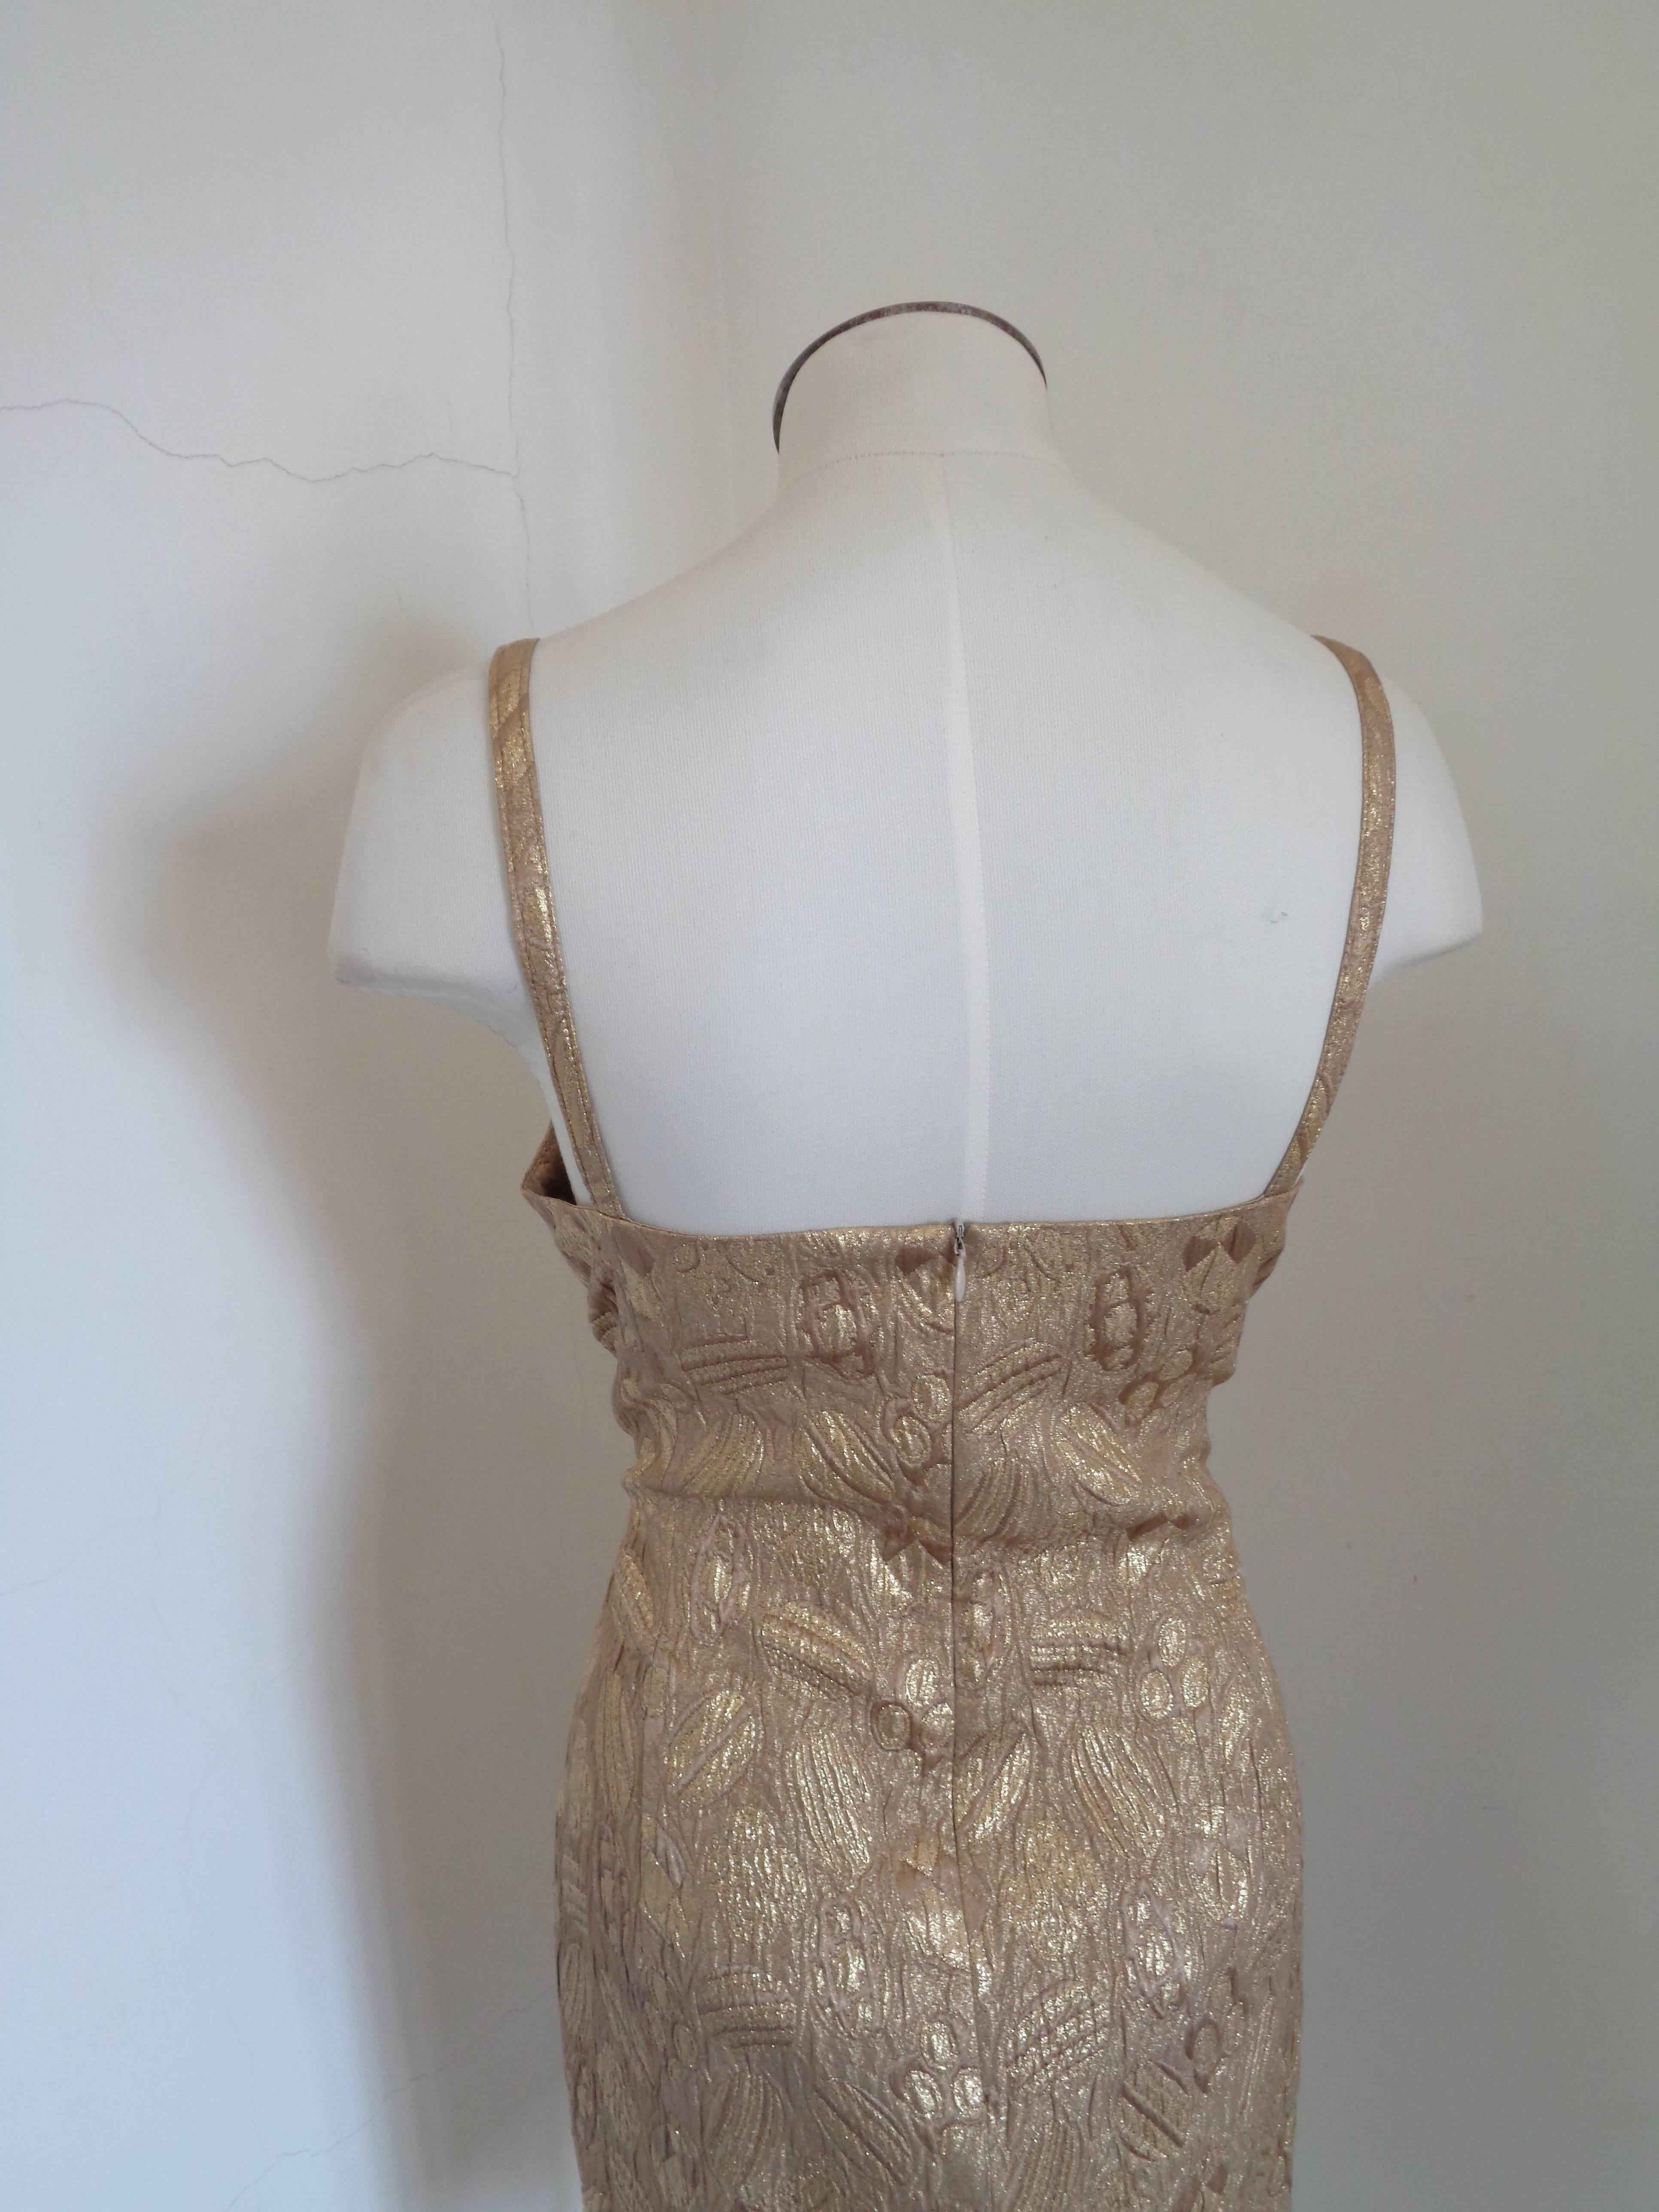 Loretta di Lorenzo Gold Tone Tailored Dress

Size 42 in italian size range

Composition: Acetate Silk